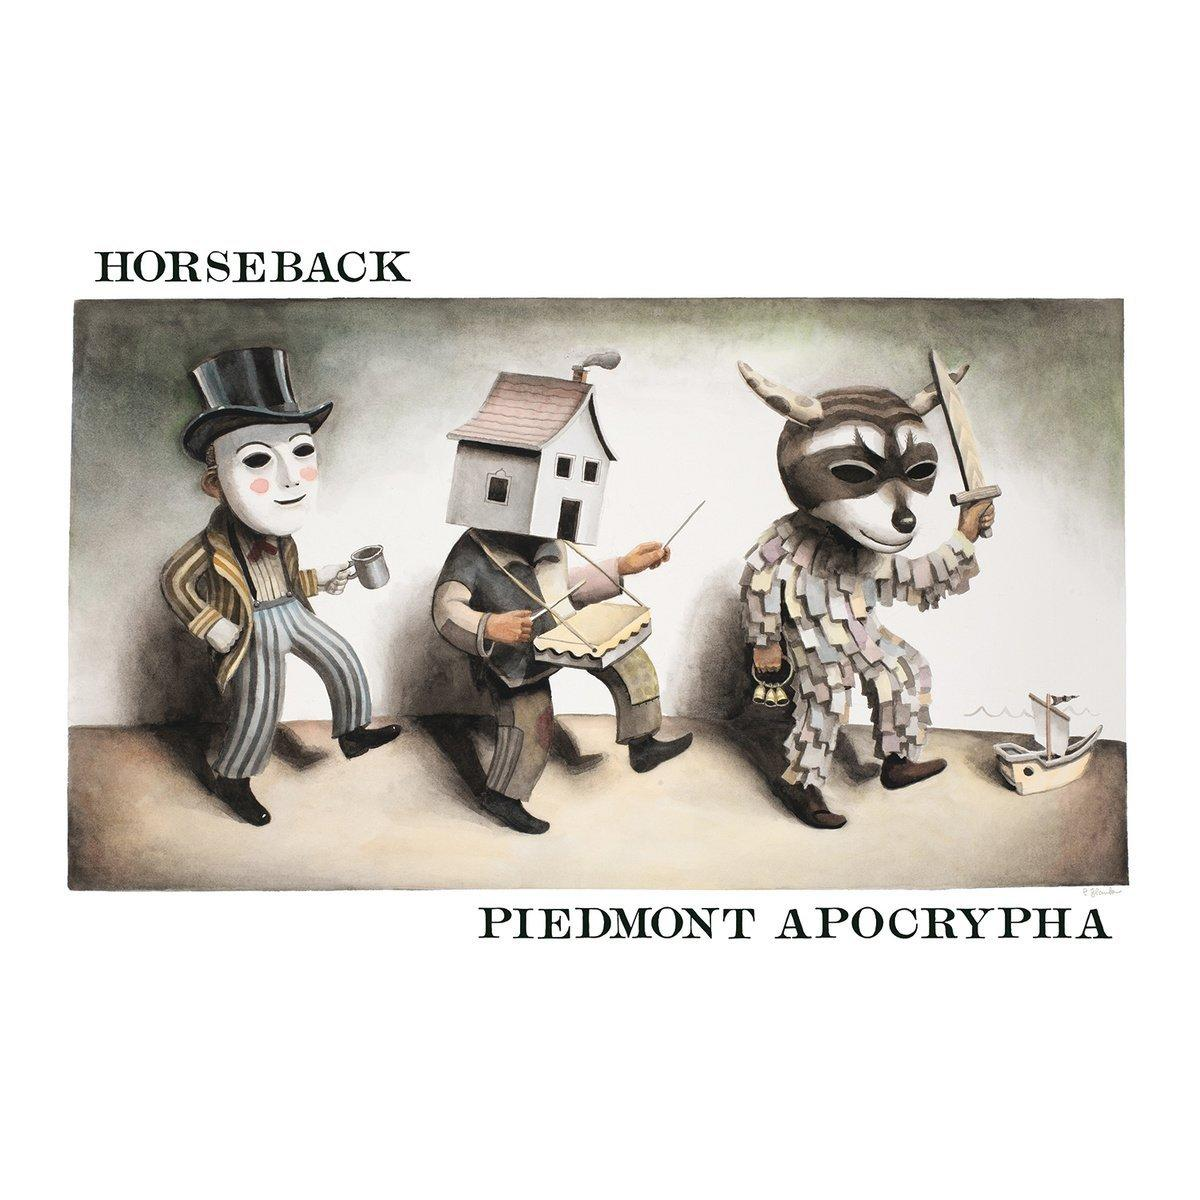 Piedmont (CD) - Apocrypha Horseback -